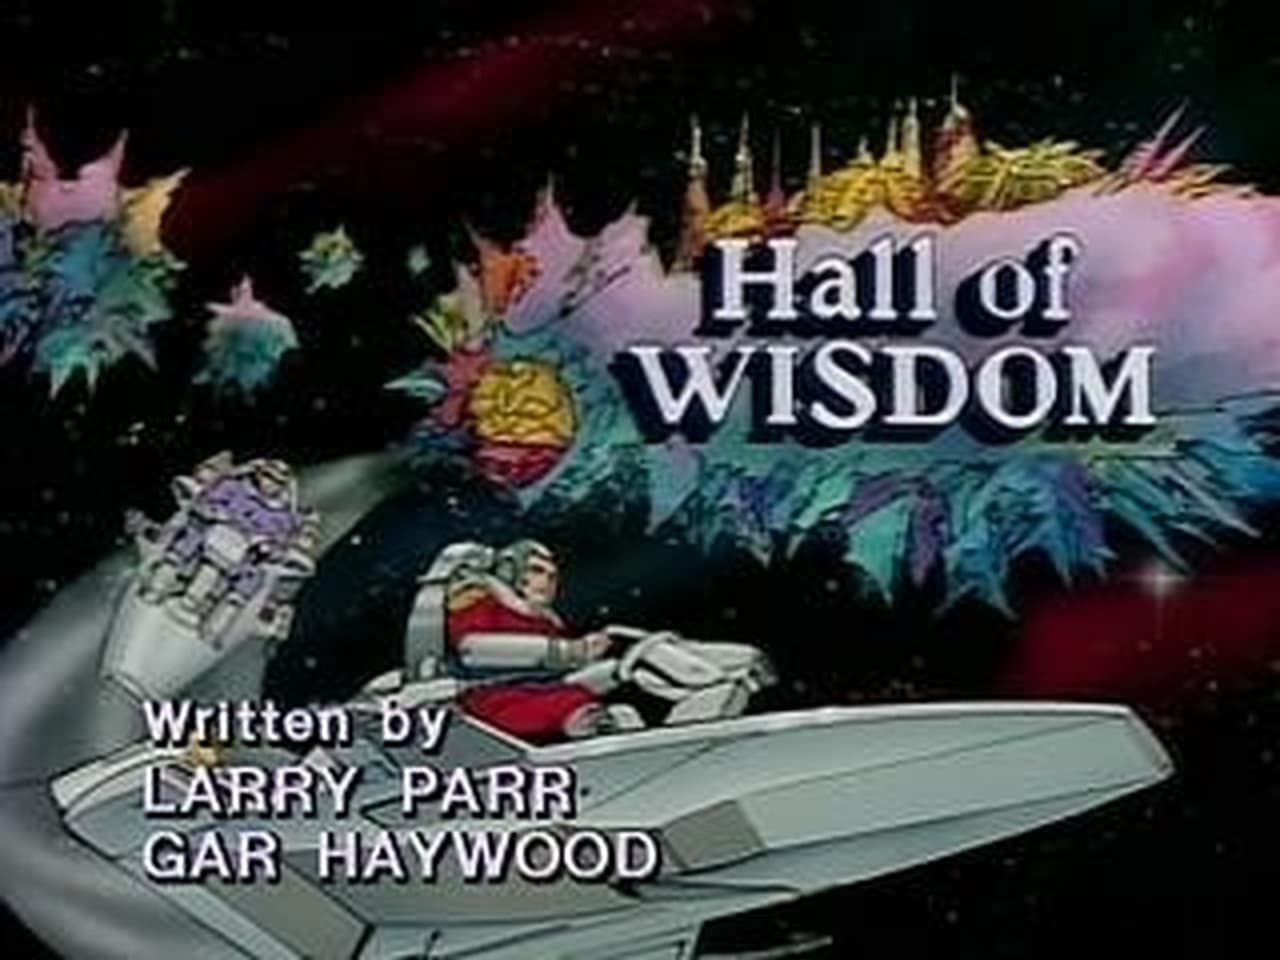 The Hall of Wisdom